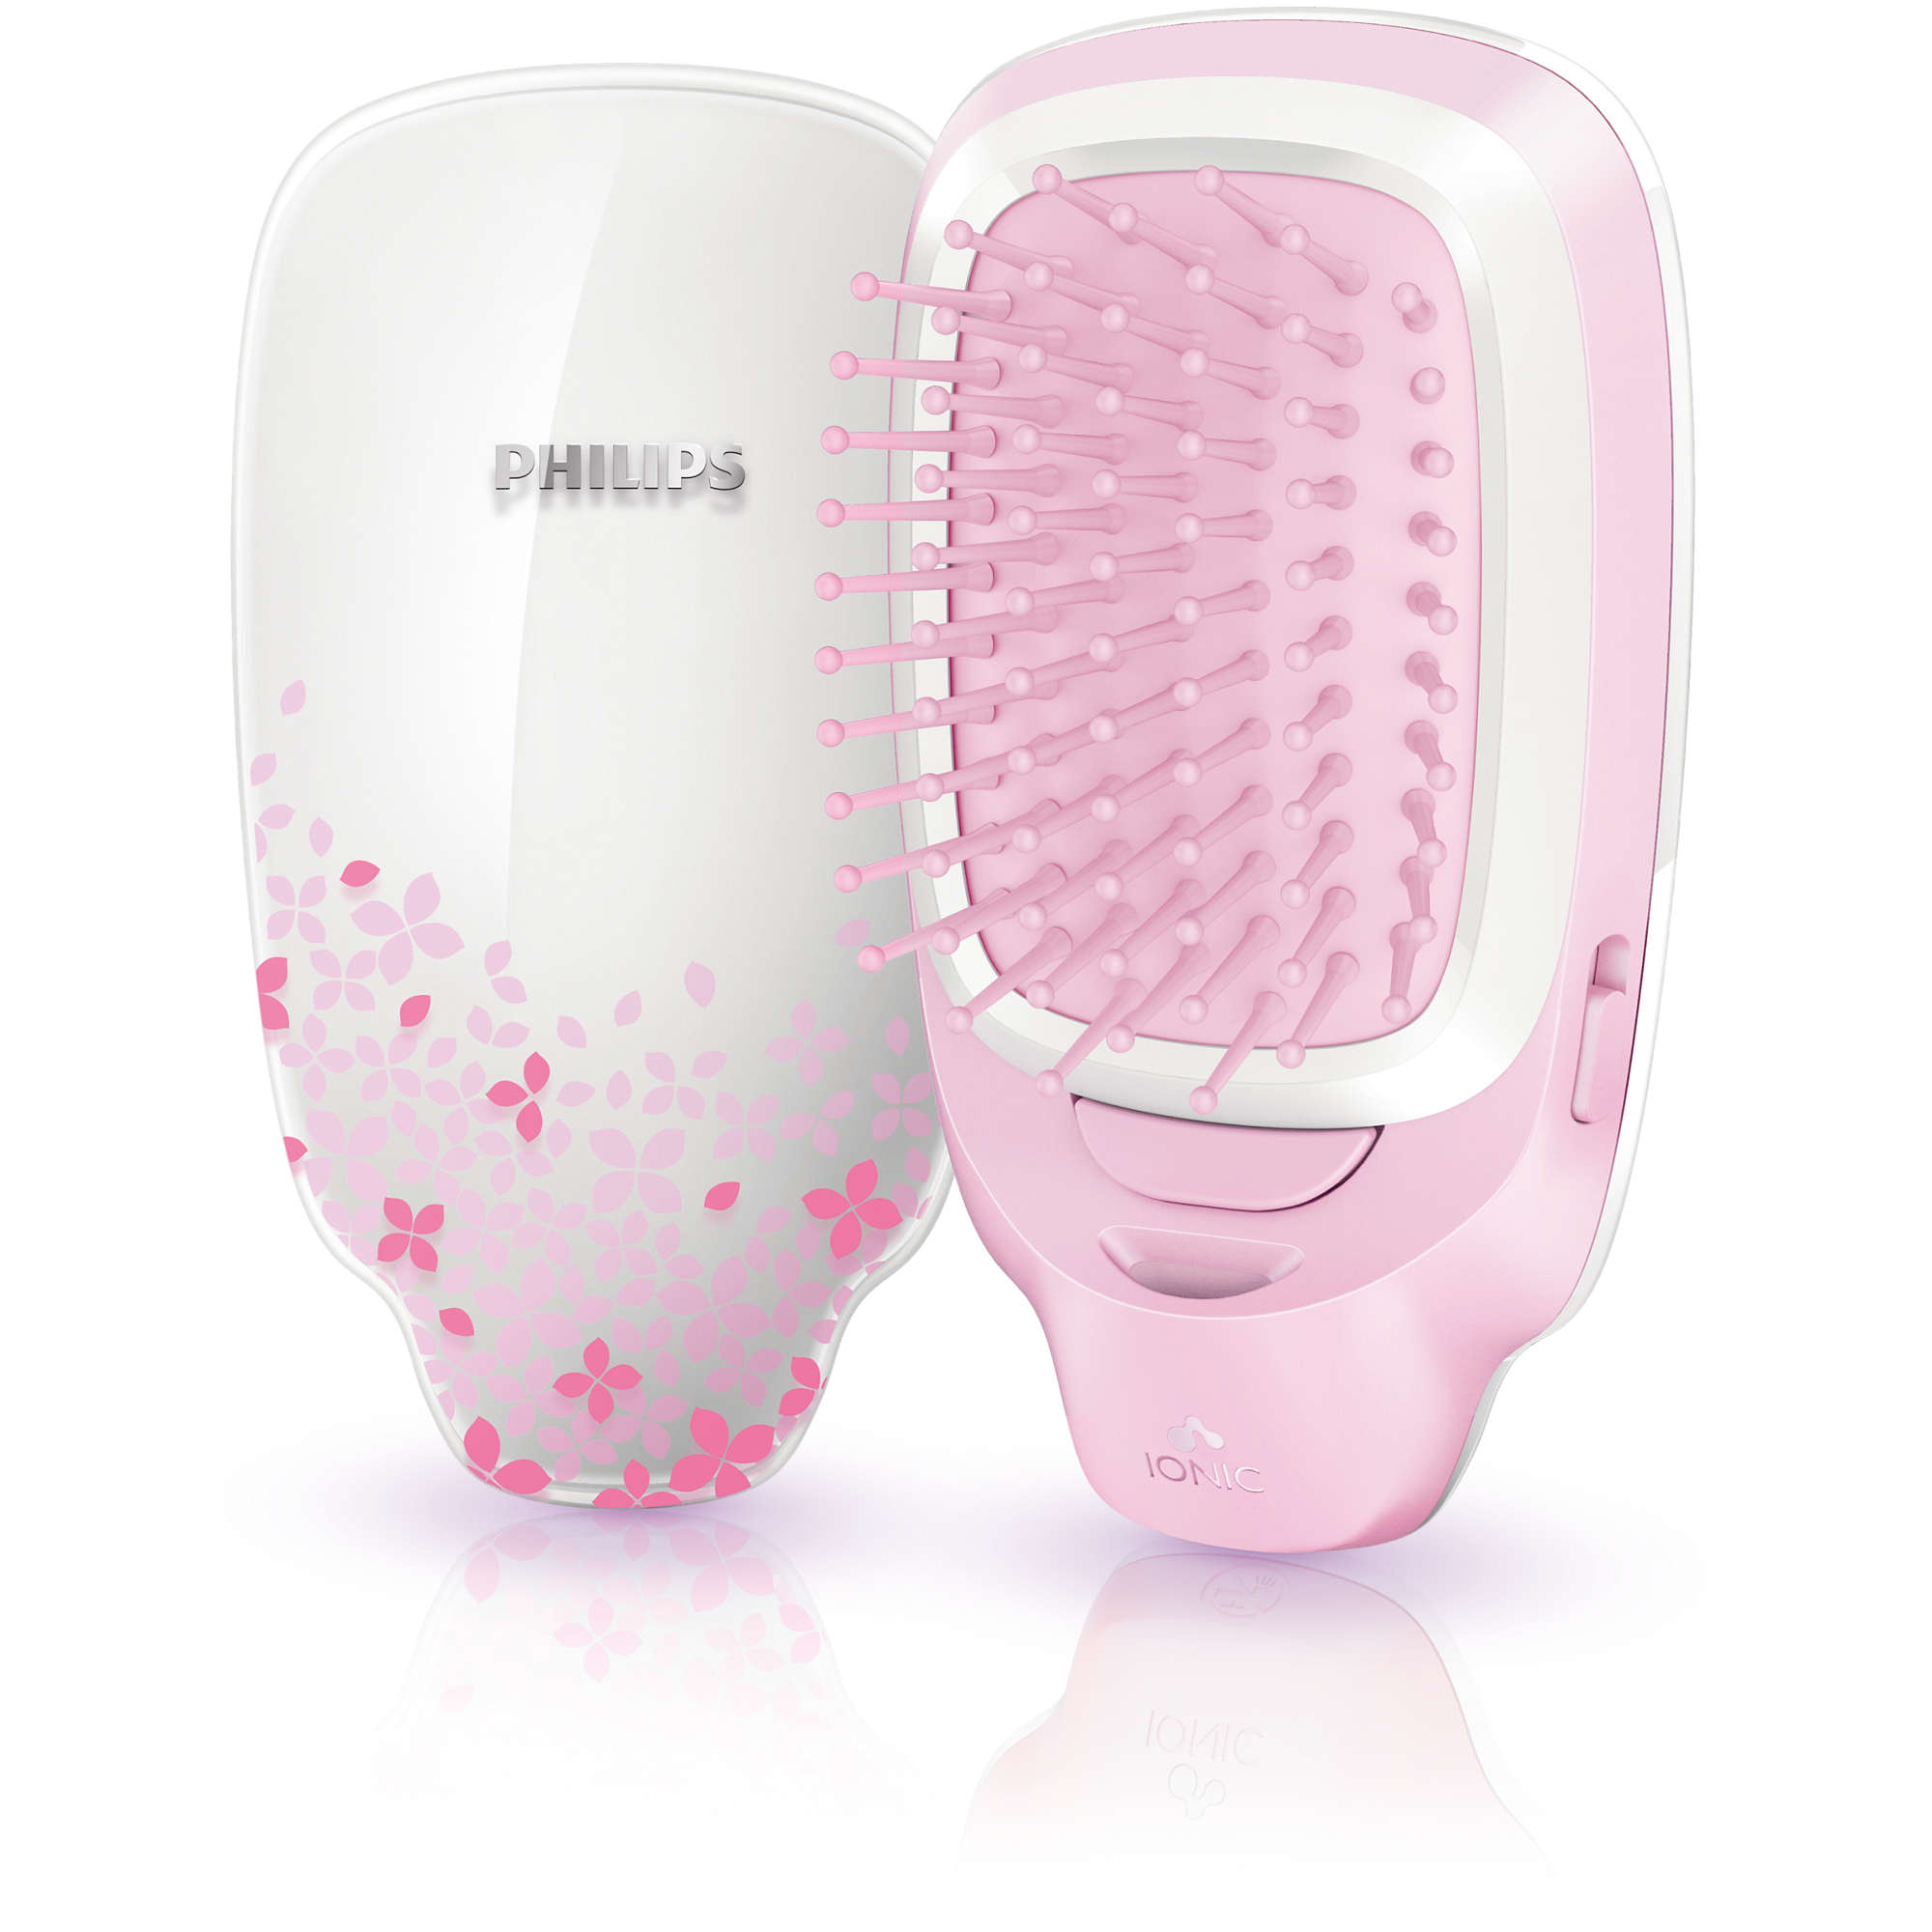 Щетка для волос филипс. Расческа Philips easy Brush. Расческа Philips с батарейкой. Philips Brush fun. Philips smooth and shiny hair.